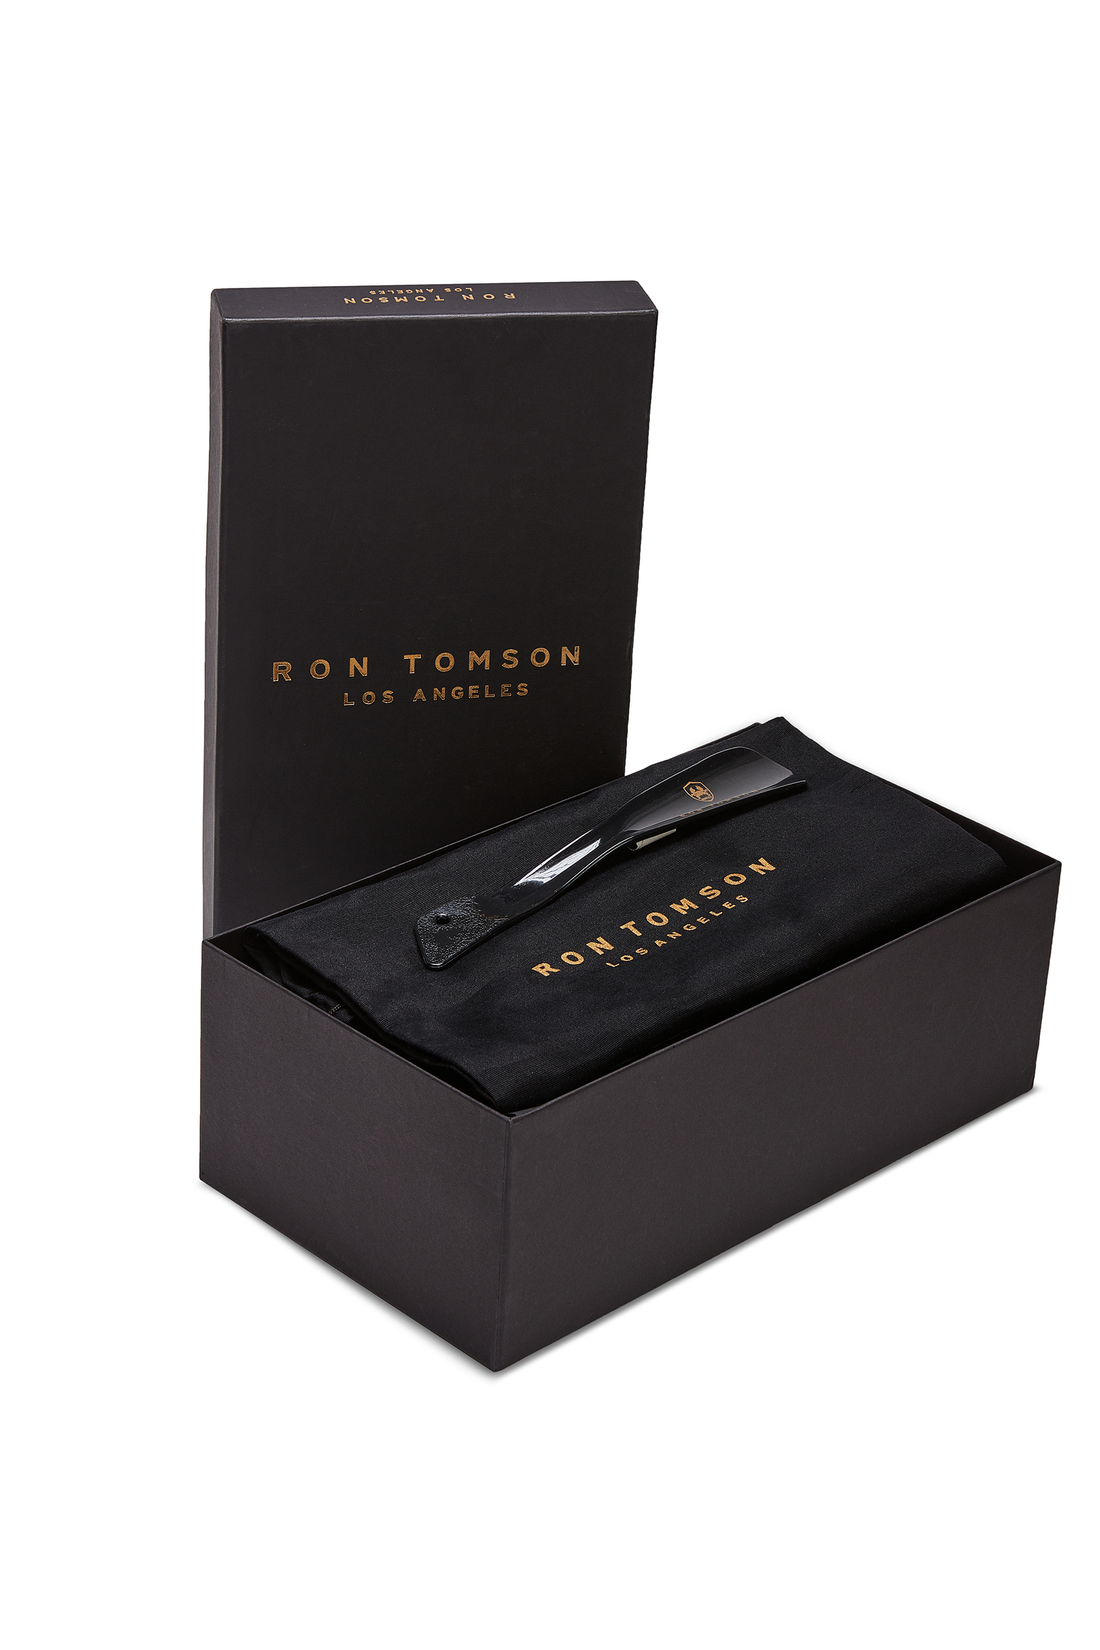 New FOOTWEAR - C-5706 tobacco - Ron Tomson